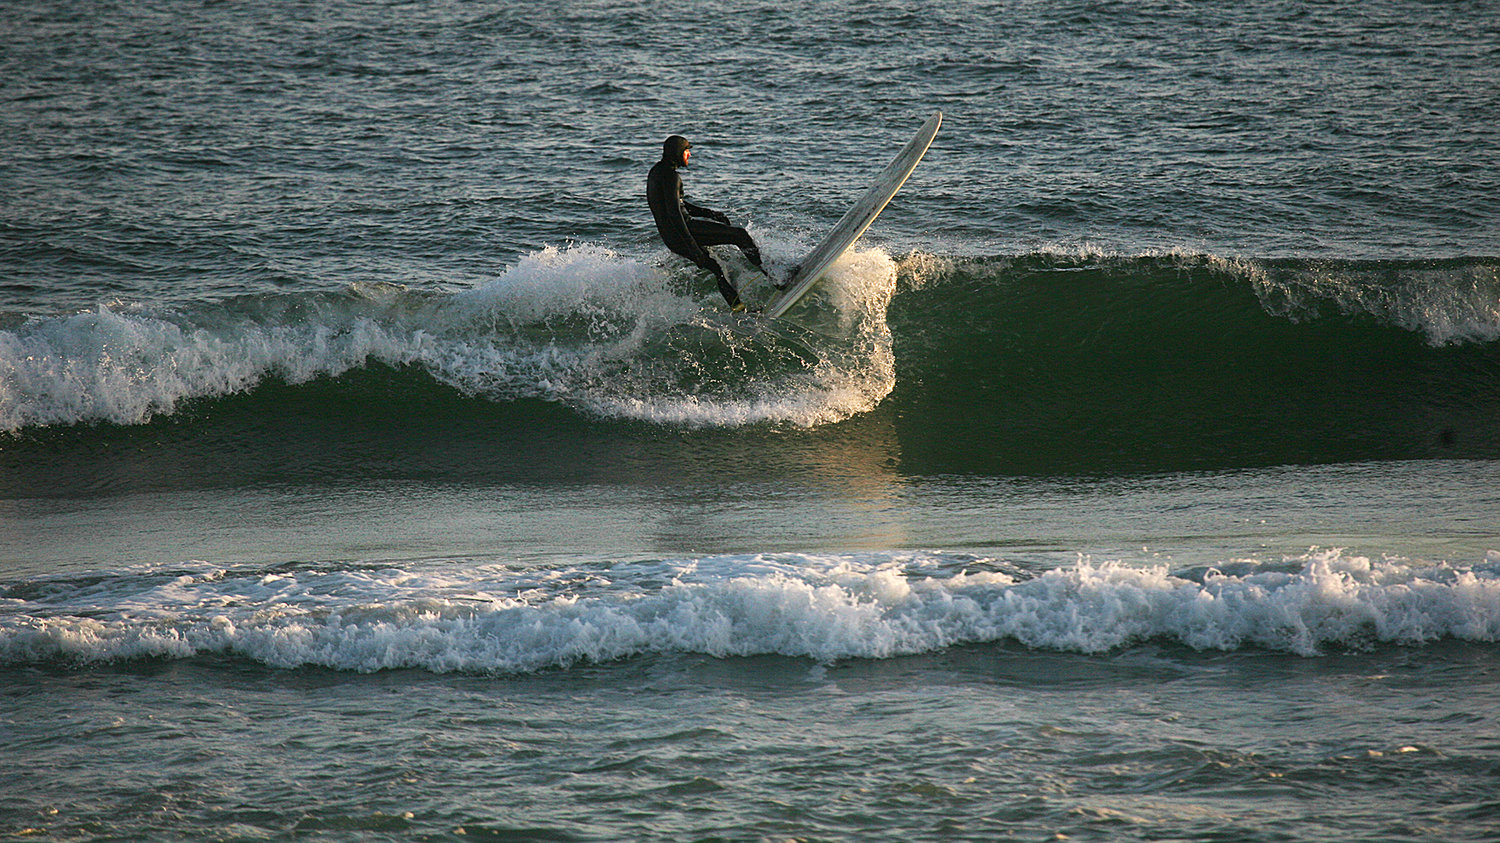 Cameron Marks rides a wave at Cisco Beach on Monday.